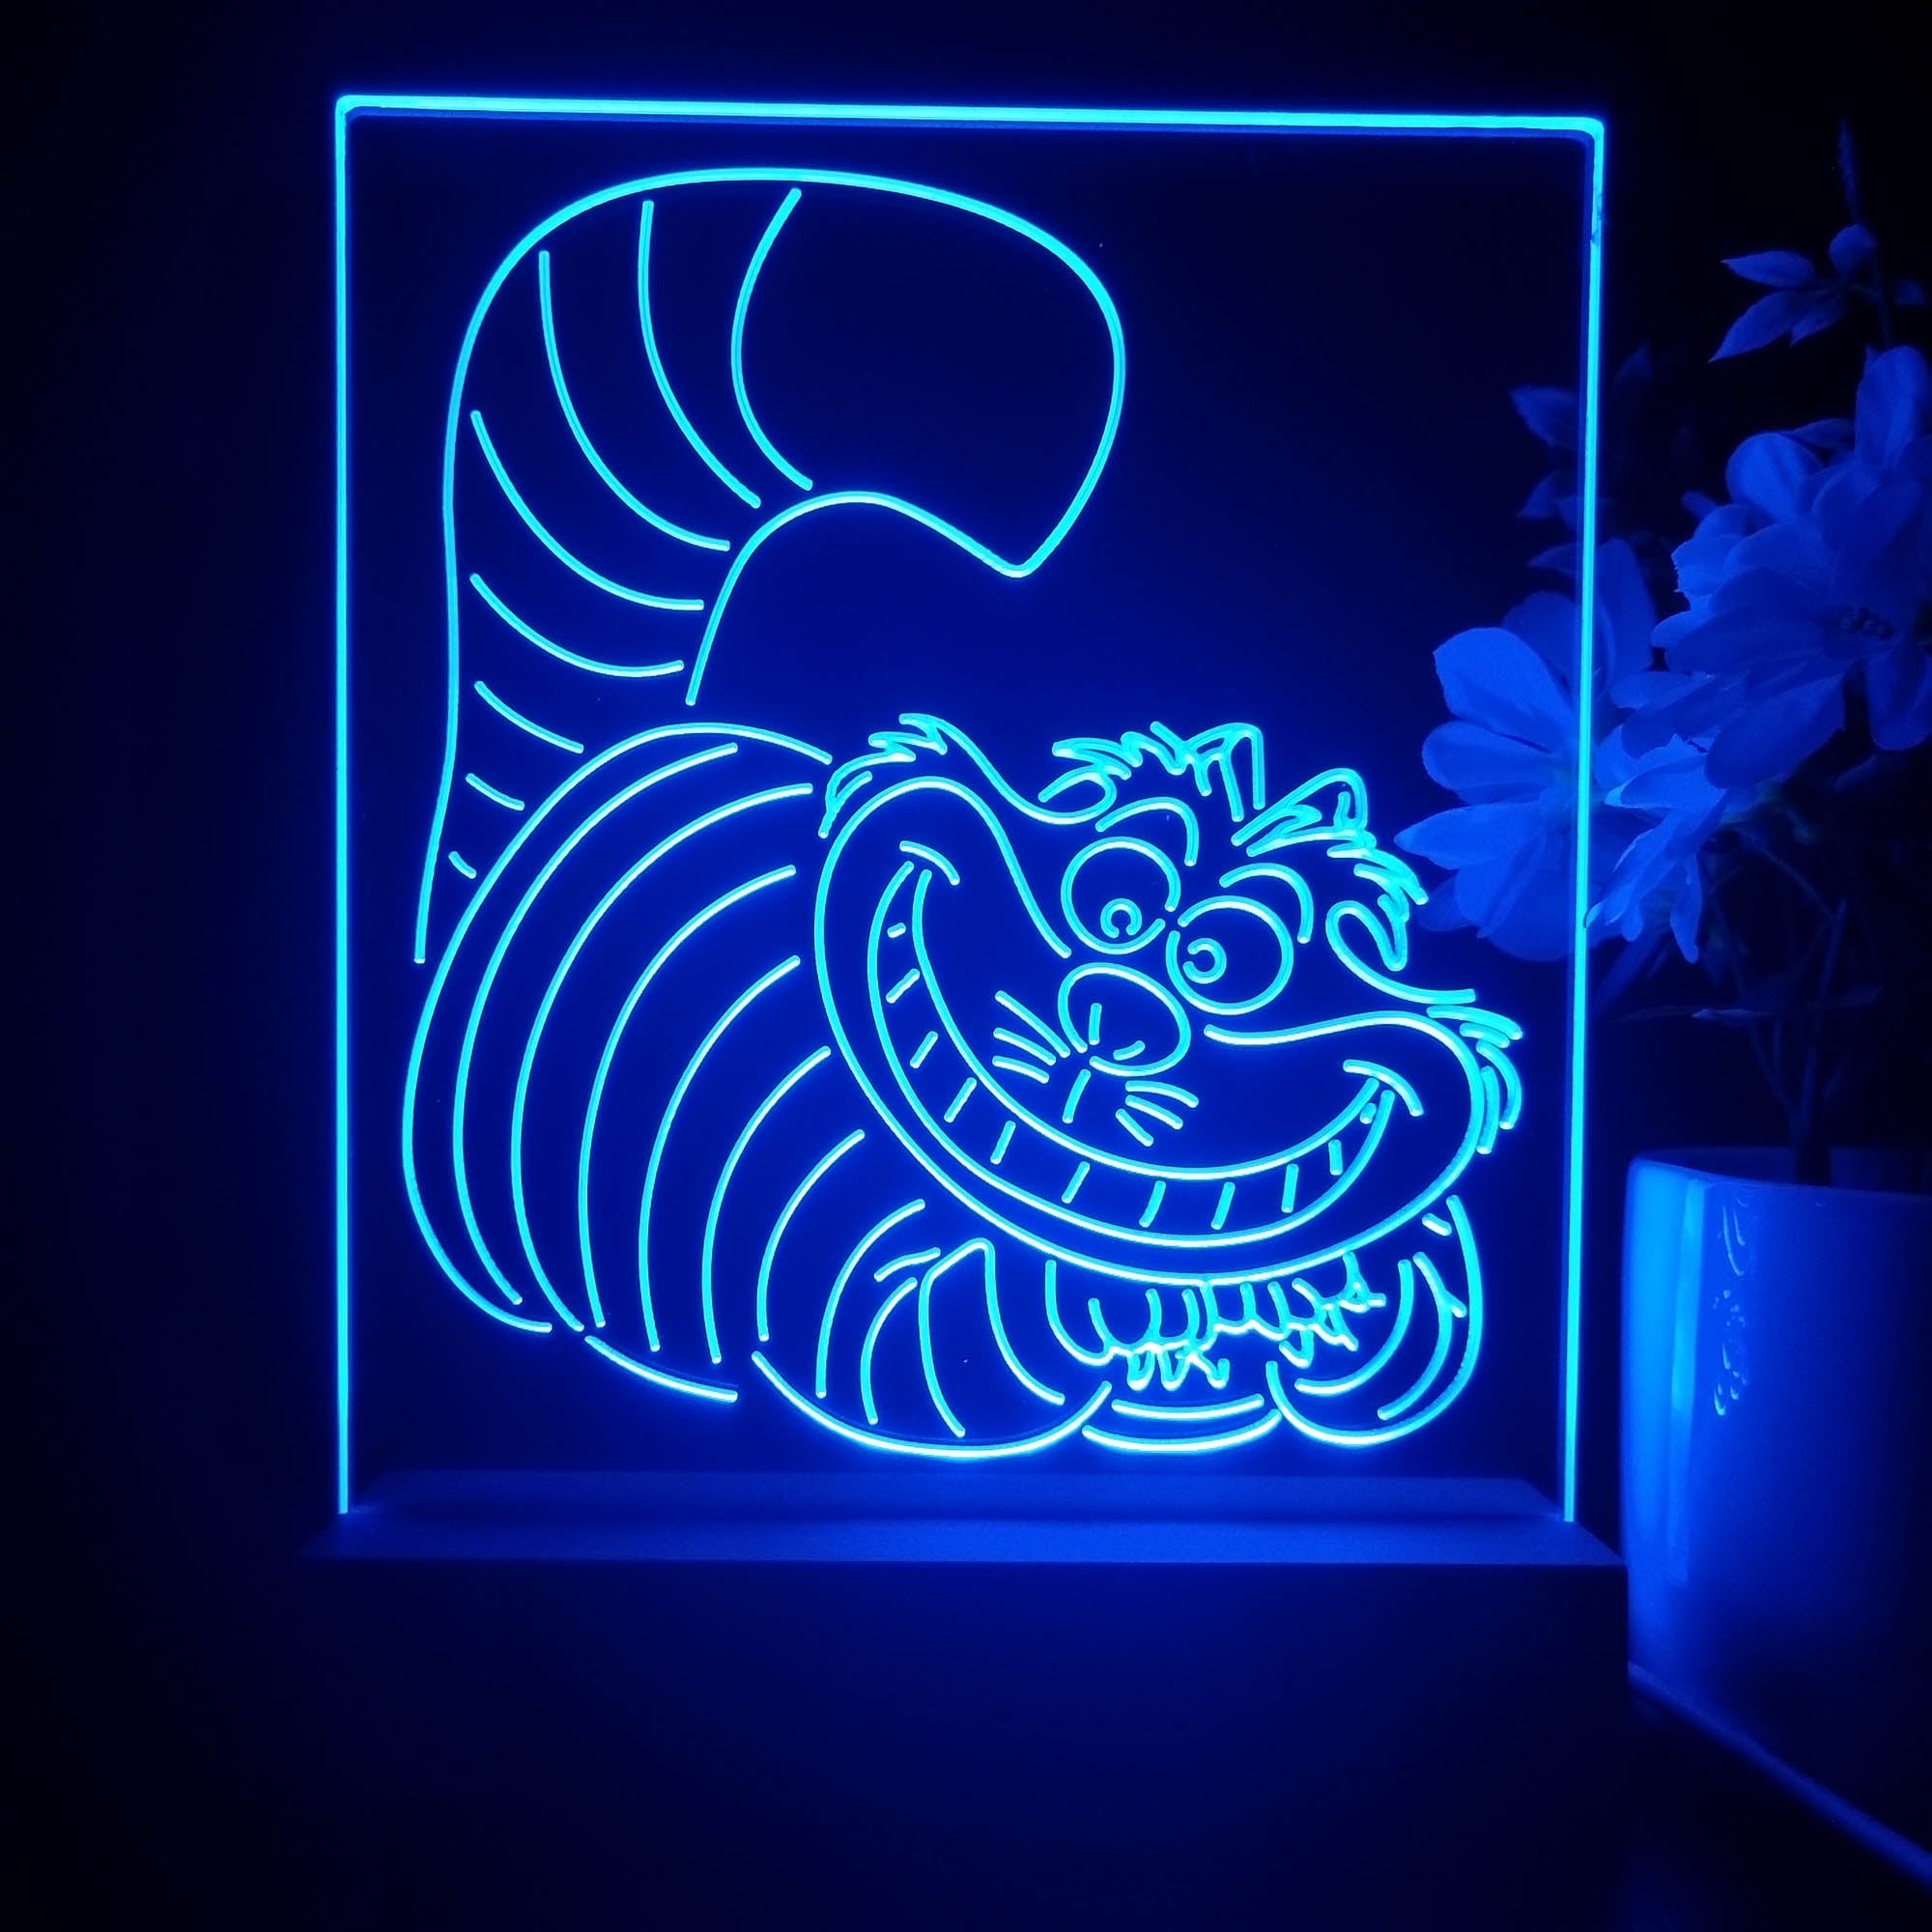 The Cheshire Cat Alice in Wonderland 3D Illusion Night Light Desk Lamp